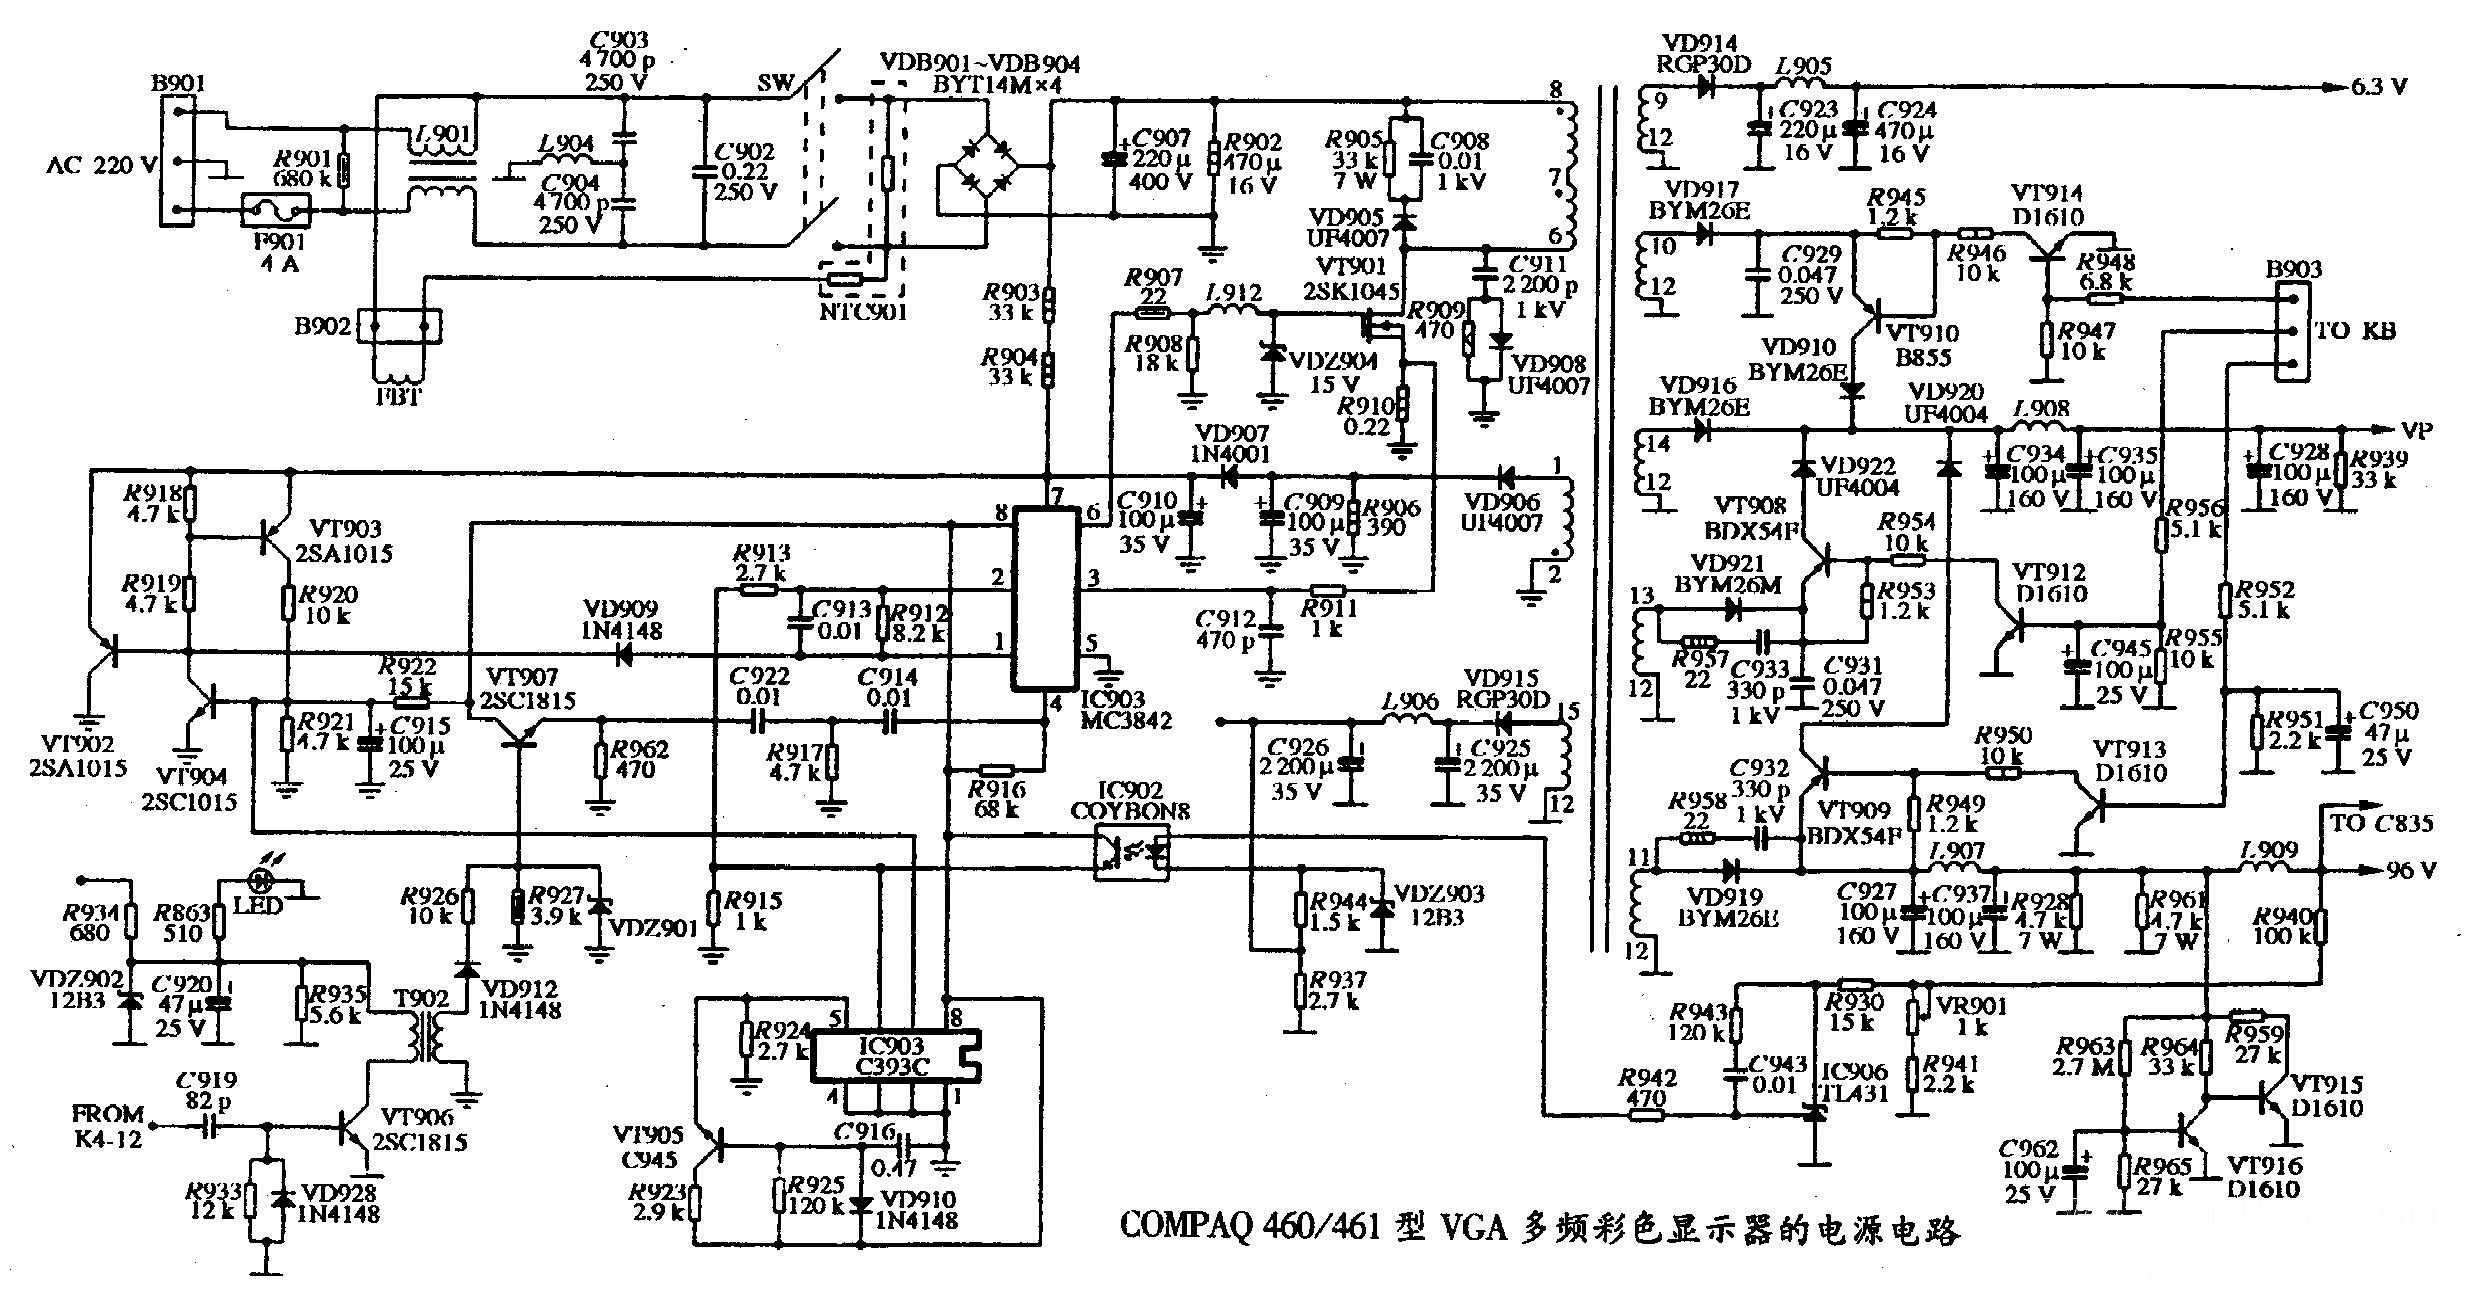 COMPAQ 460/461型VGA多频彩色显示器的电源